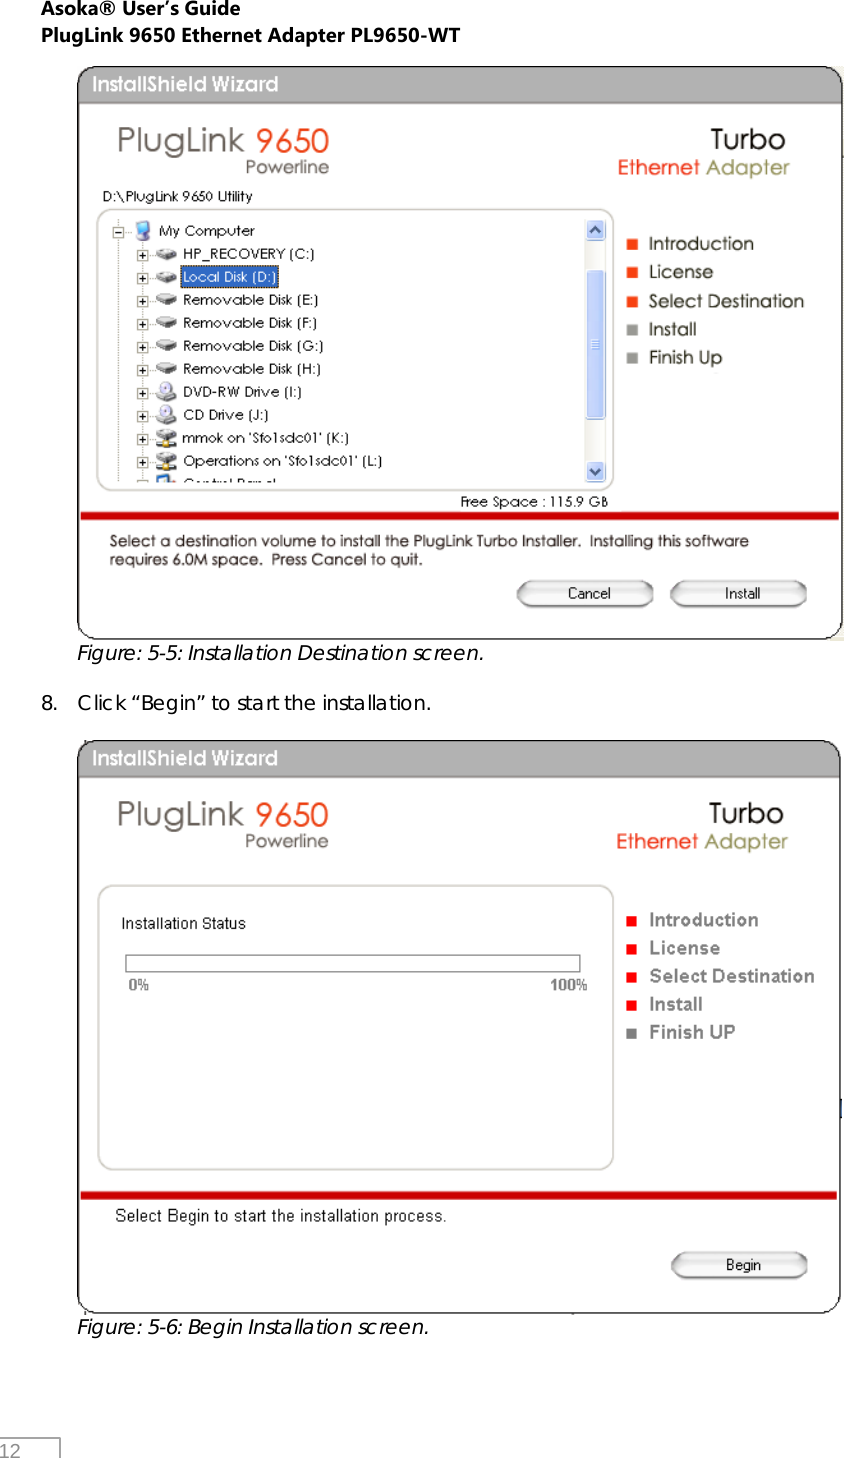 Asoka® User’s Guide PlugLink 9650 Ethernet Adapter PL9650-WT   12  Figure: 5-5: Installation Destination screen.  8. Click “Begin” to start the installation.   Figure: 5-6: Begin Installation screen.  